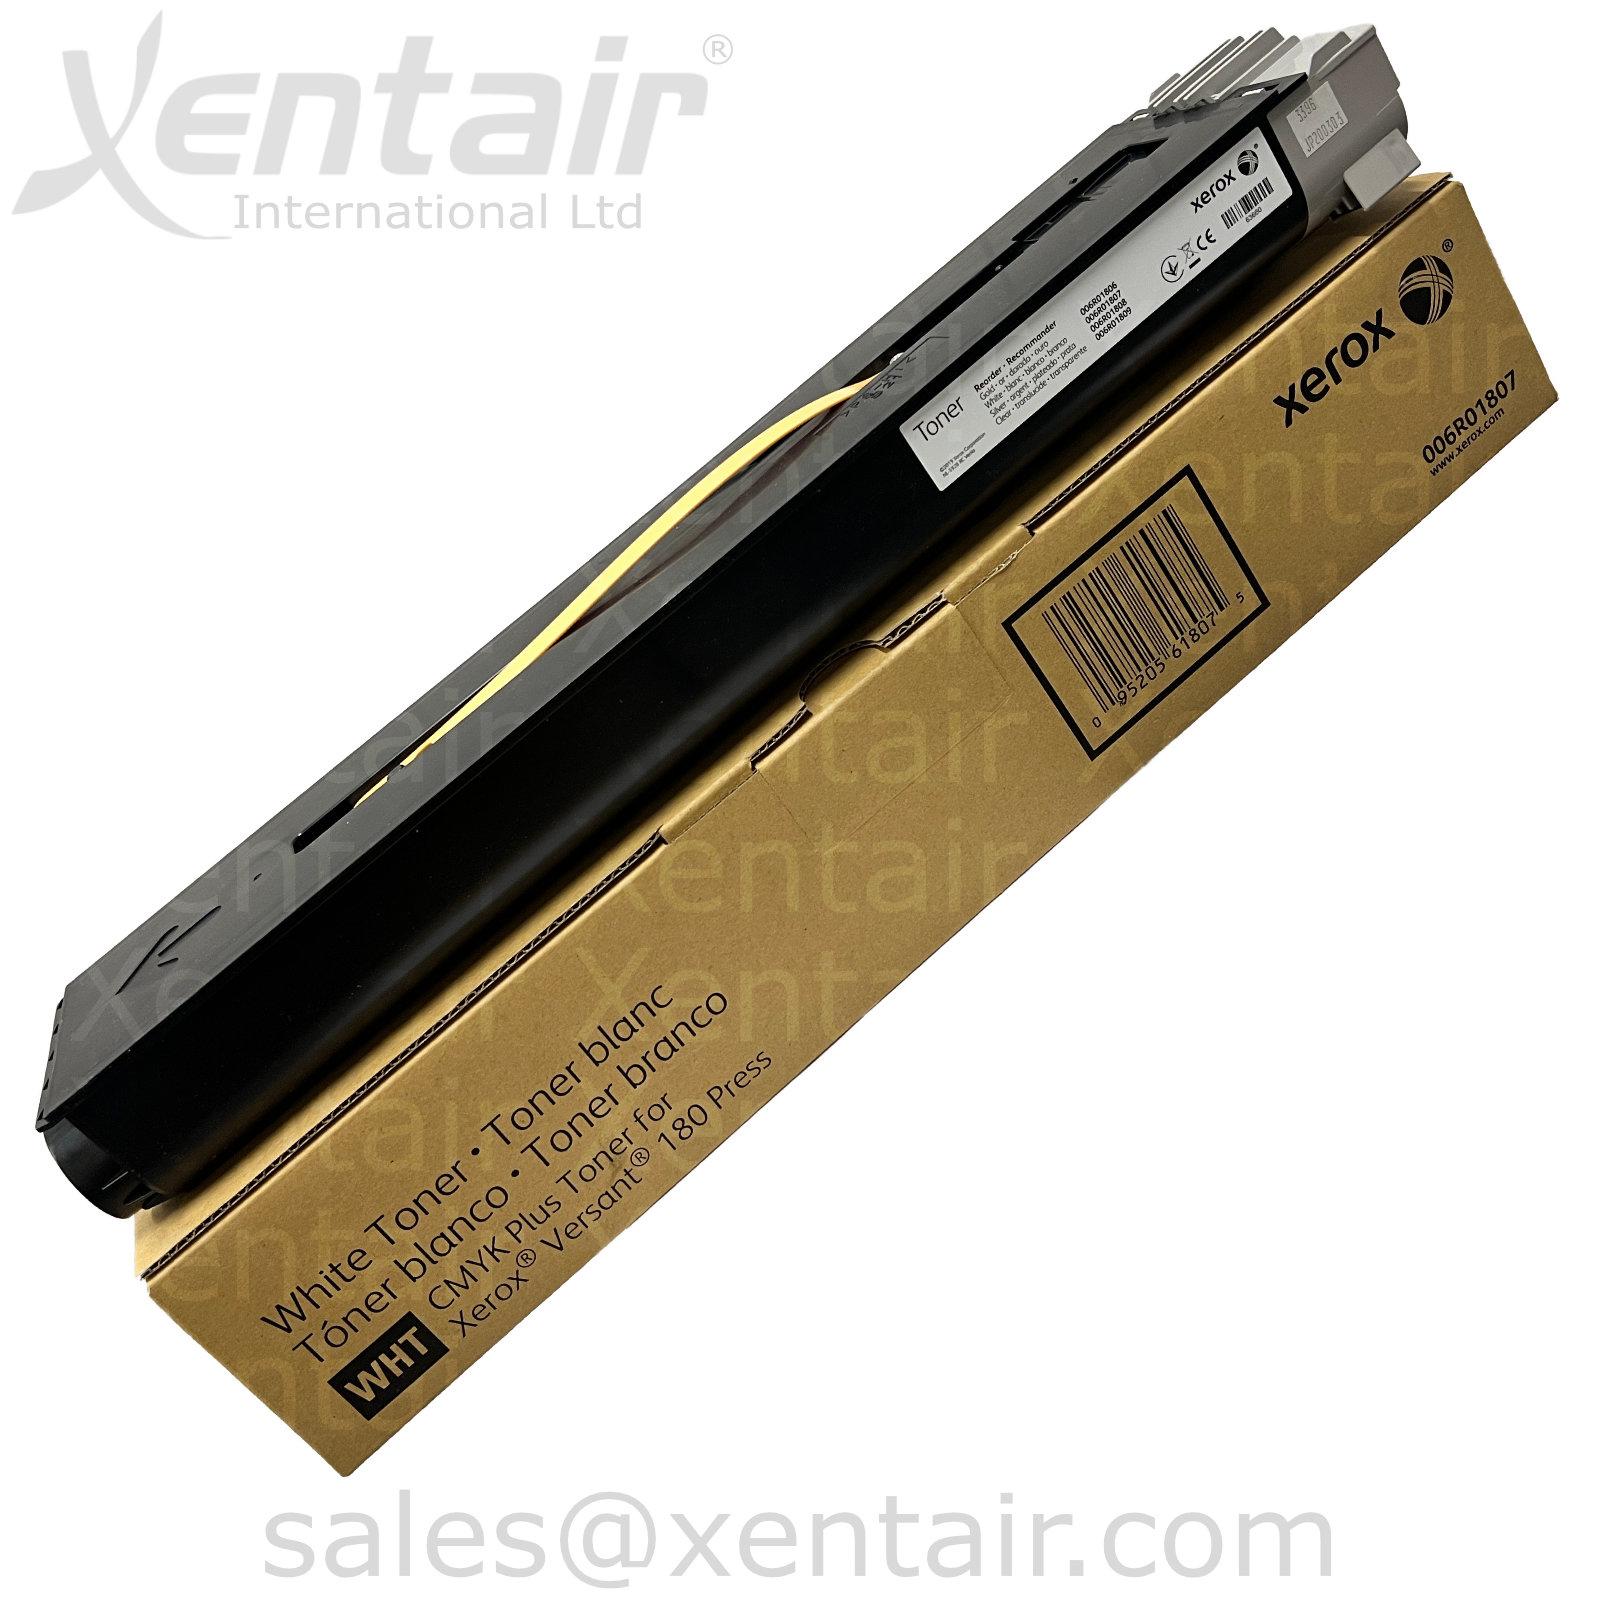 Xerox® Versant® 80 180 White Toner Cartridge 006R01807 6R01807 6R1807